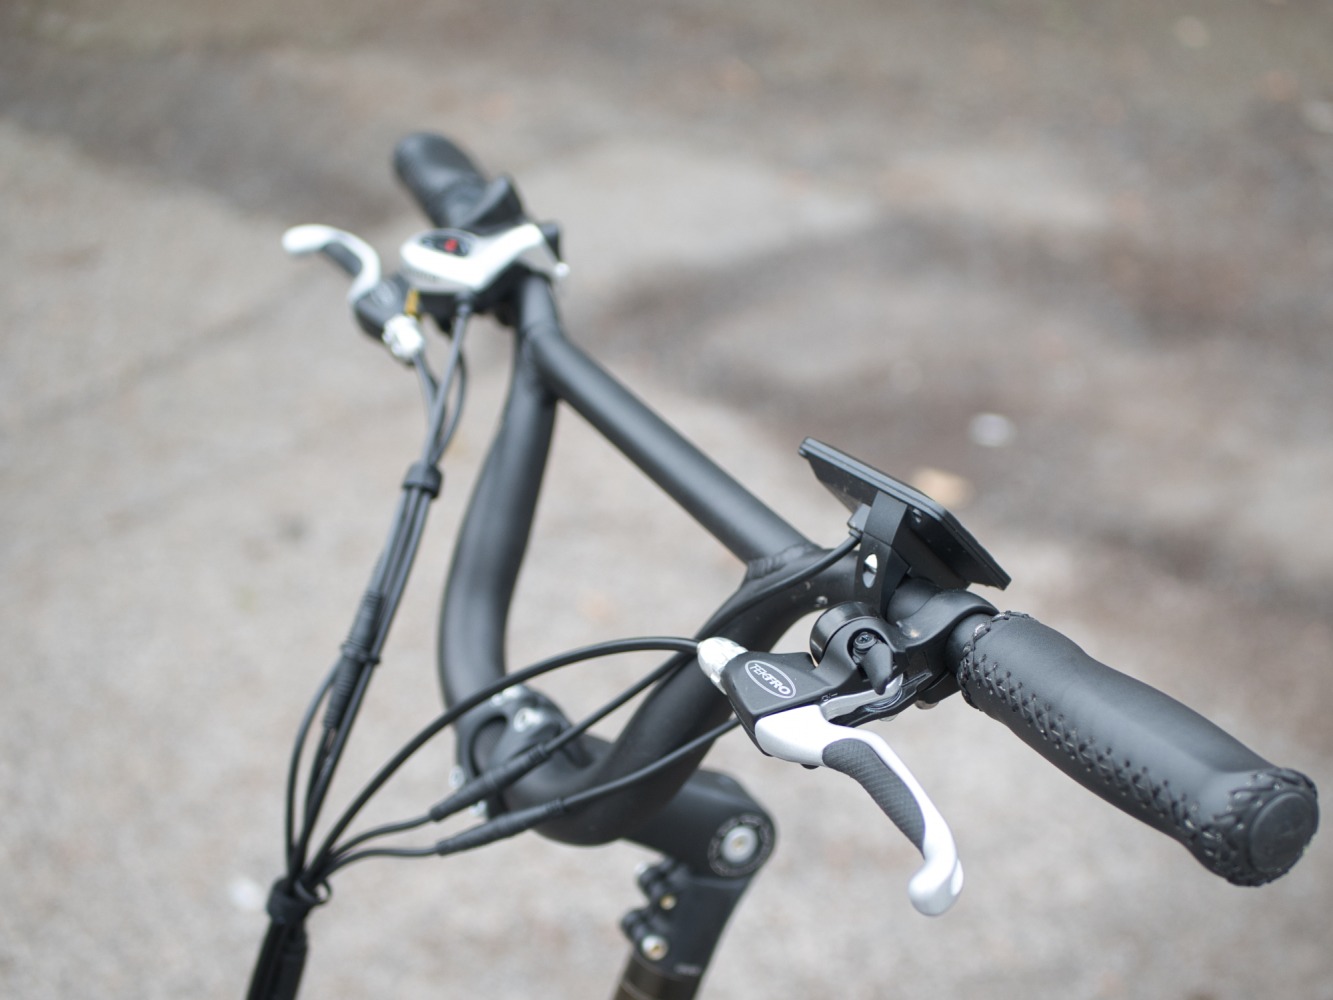 Mycle Cargo bike grips and handlebar